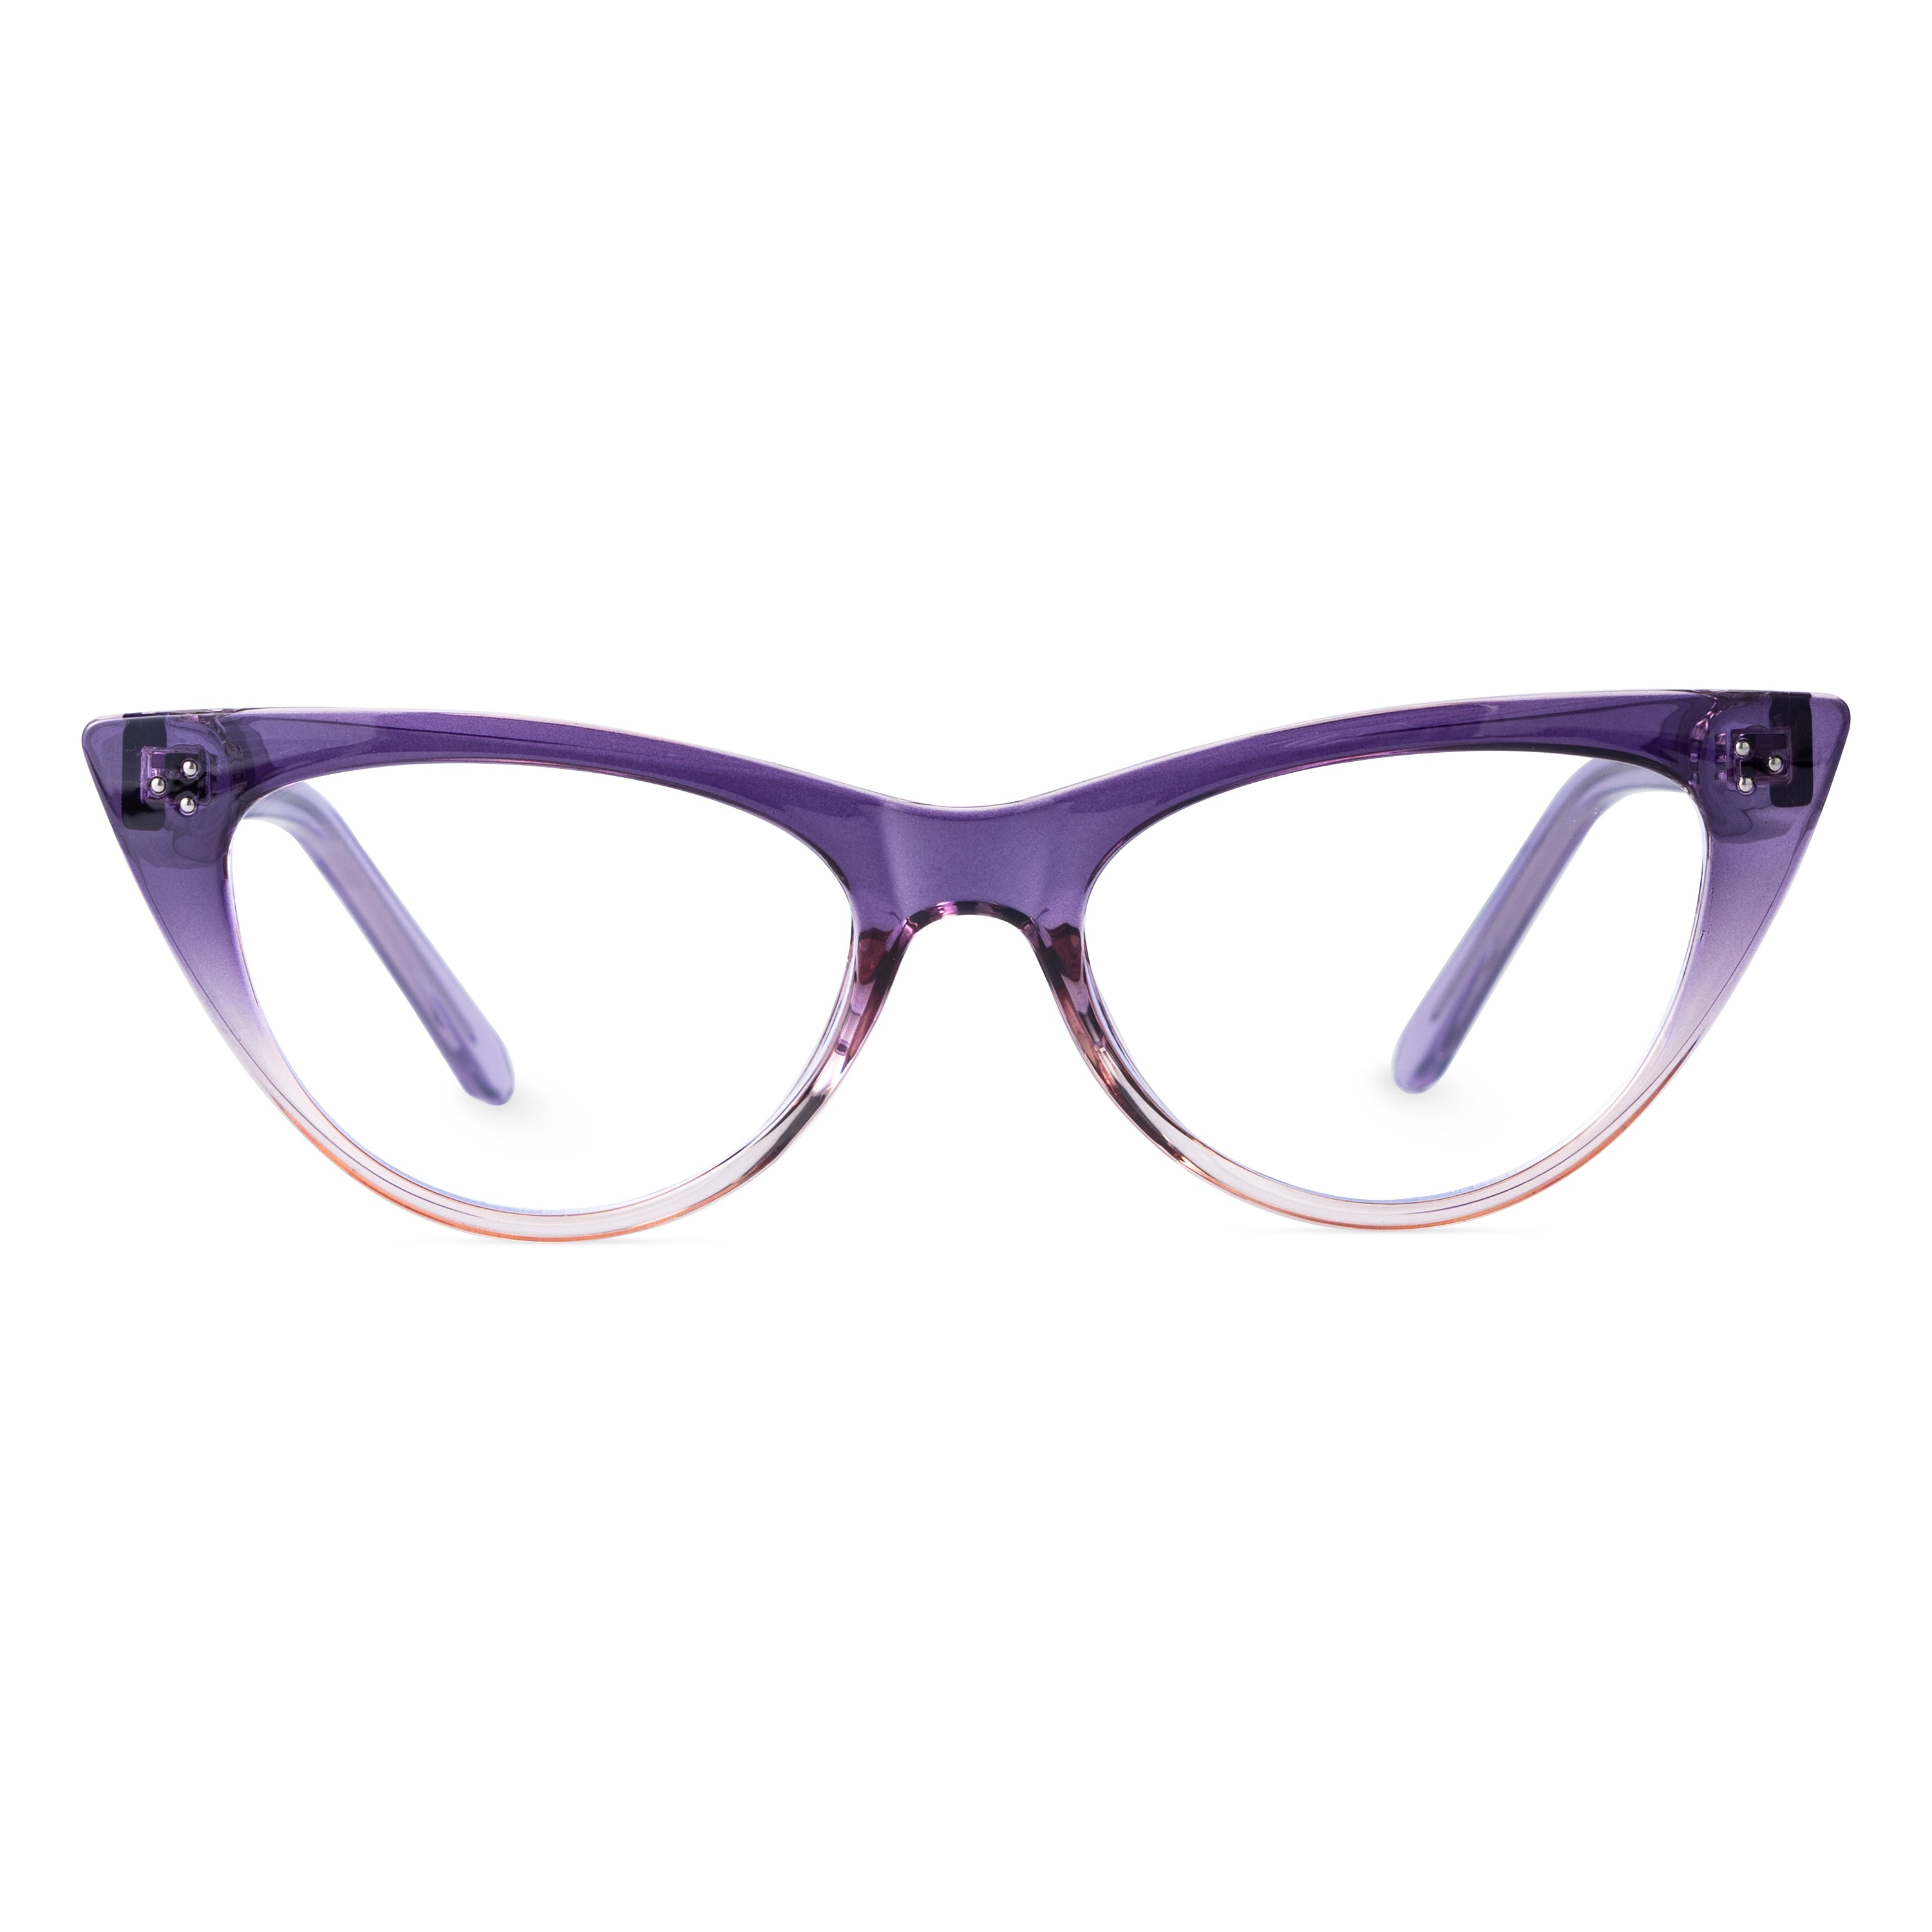 ELKLOOK Plastic White Cat Eye TR90 Sunglasses For Sale 3-5 Day Rush ...